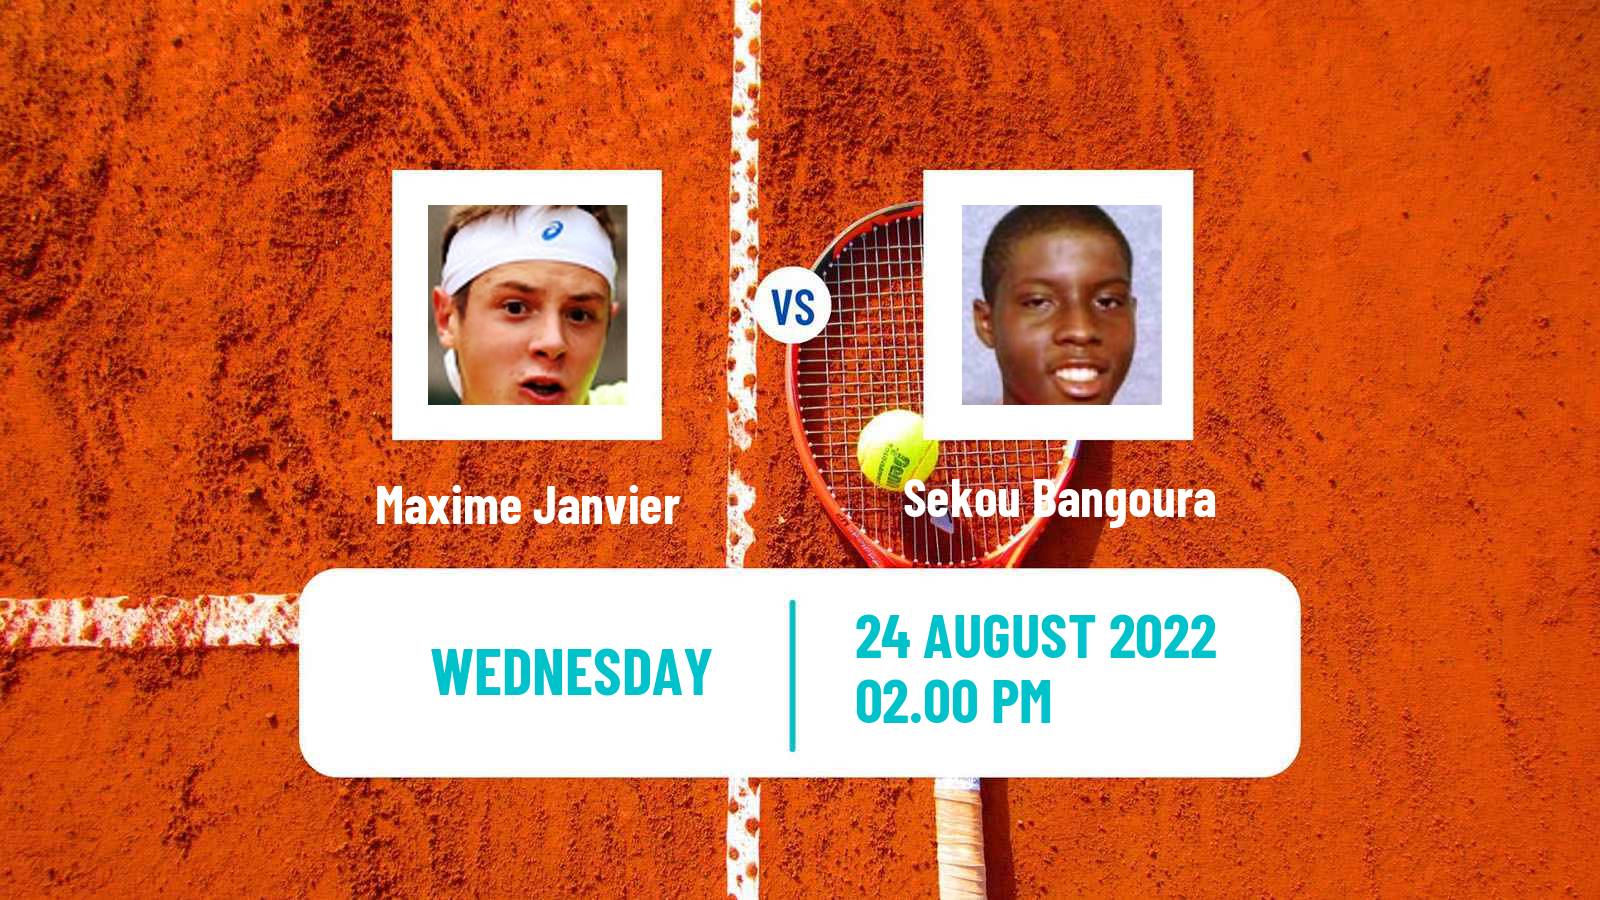 Tennis ATP Challenger Maxime Janvier - Sekou Bangoura